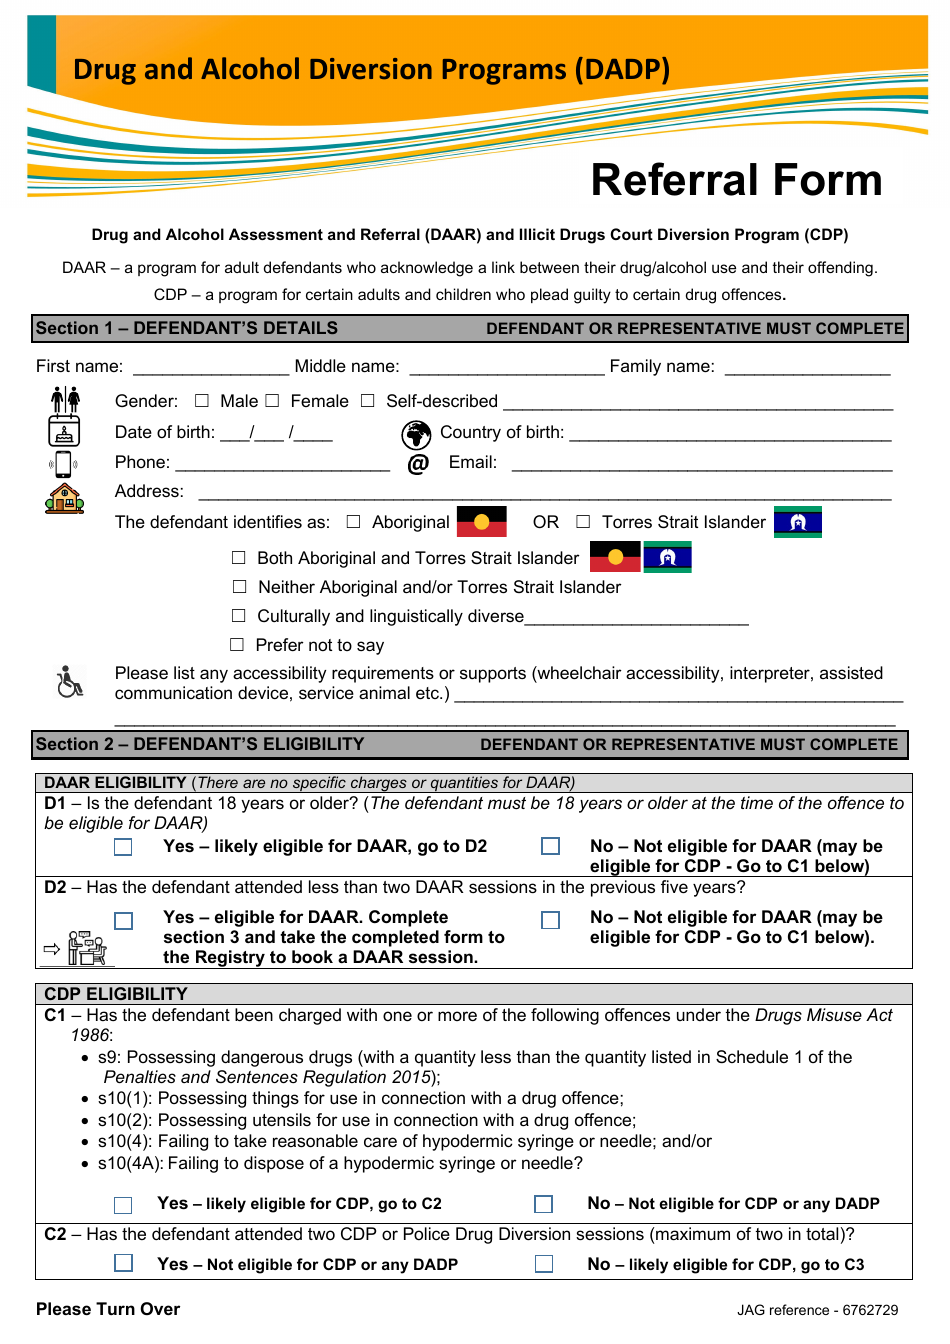 Referral Form - Drug and Alcohol Diversion Programs (Dadp) - Queensland, Australia, Page 1